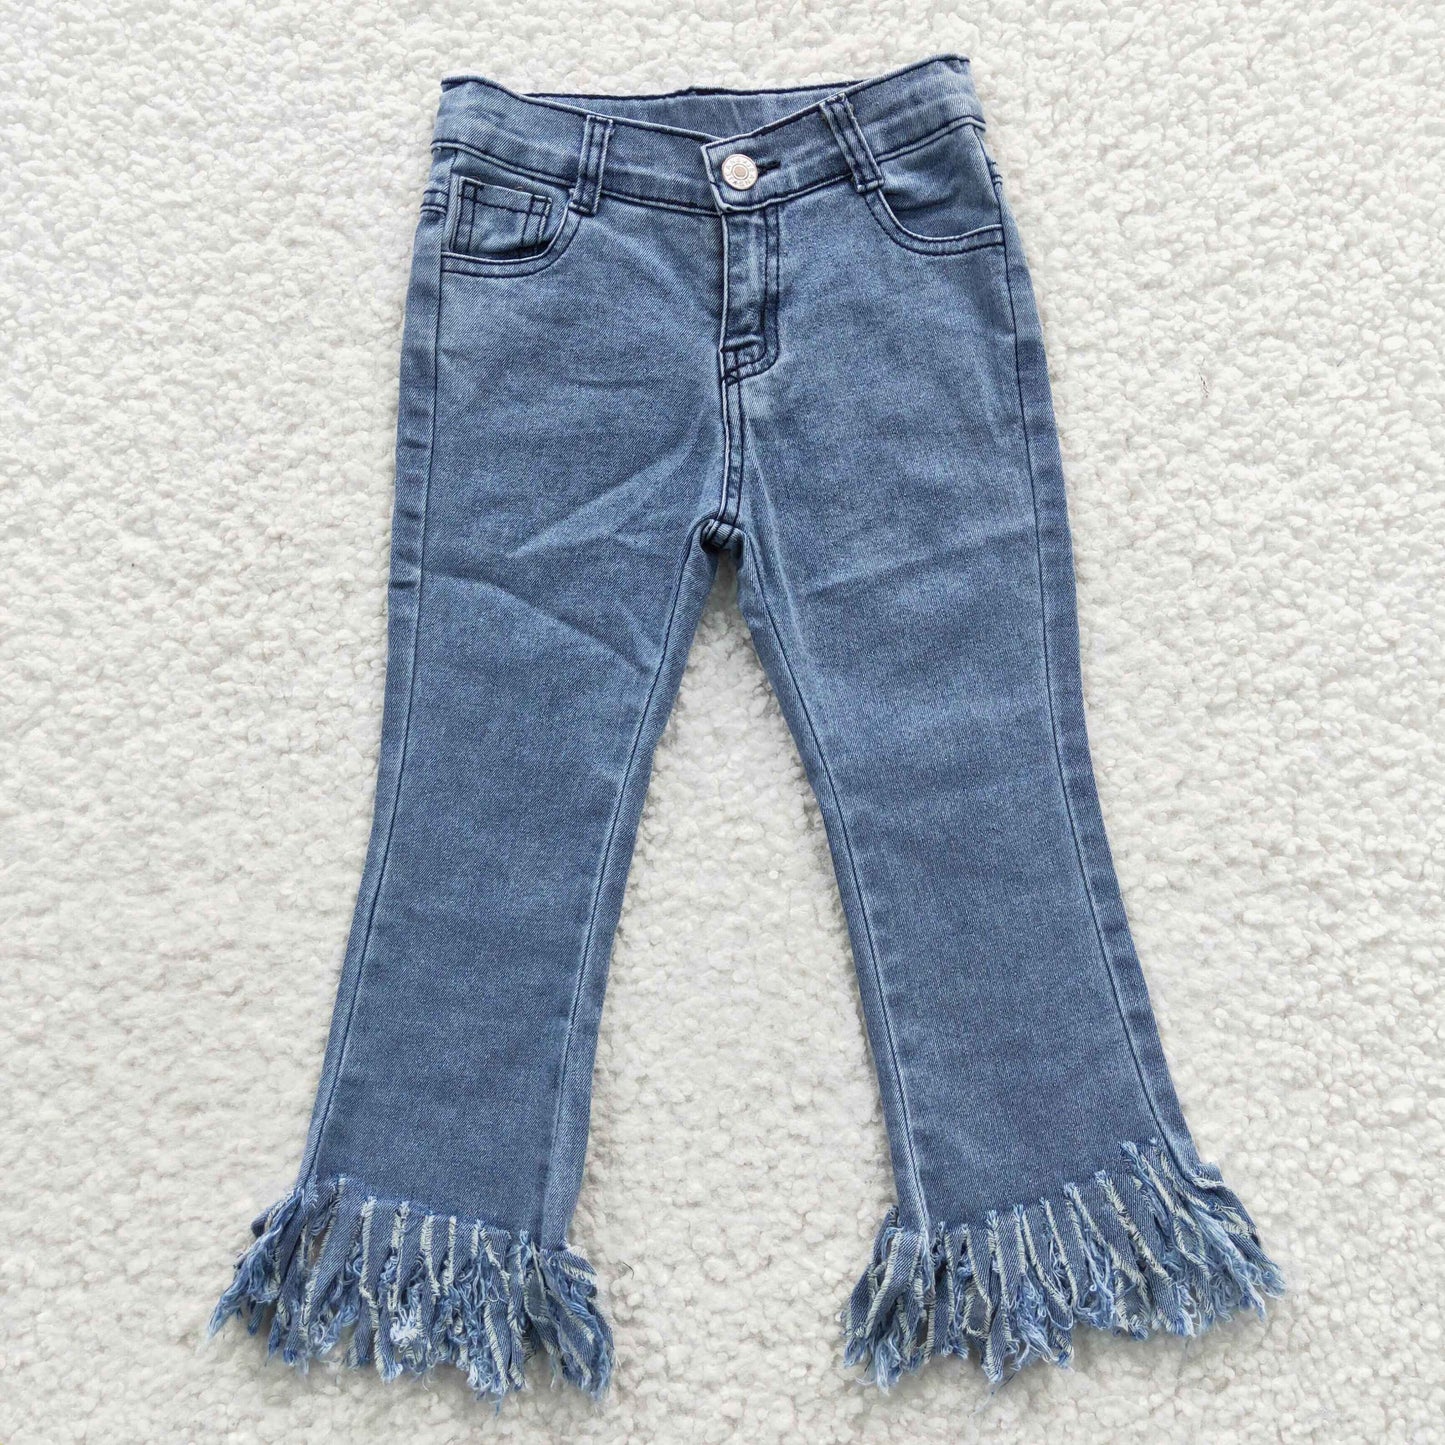 B7-13 Light blue denim tassel pants Jeans